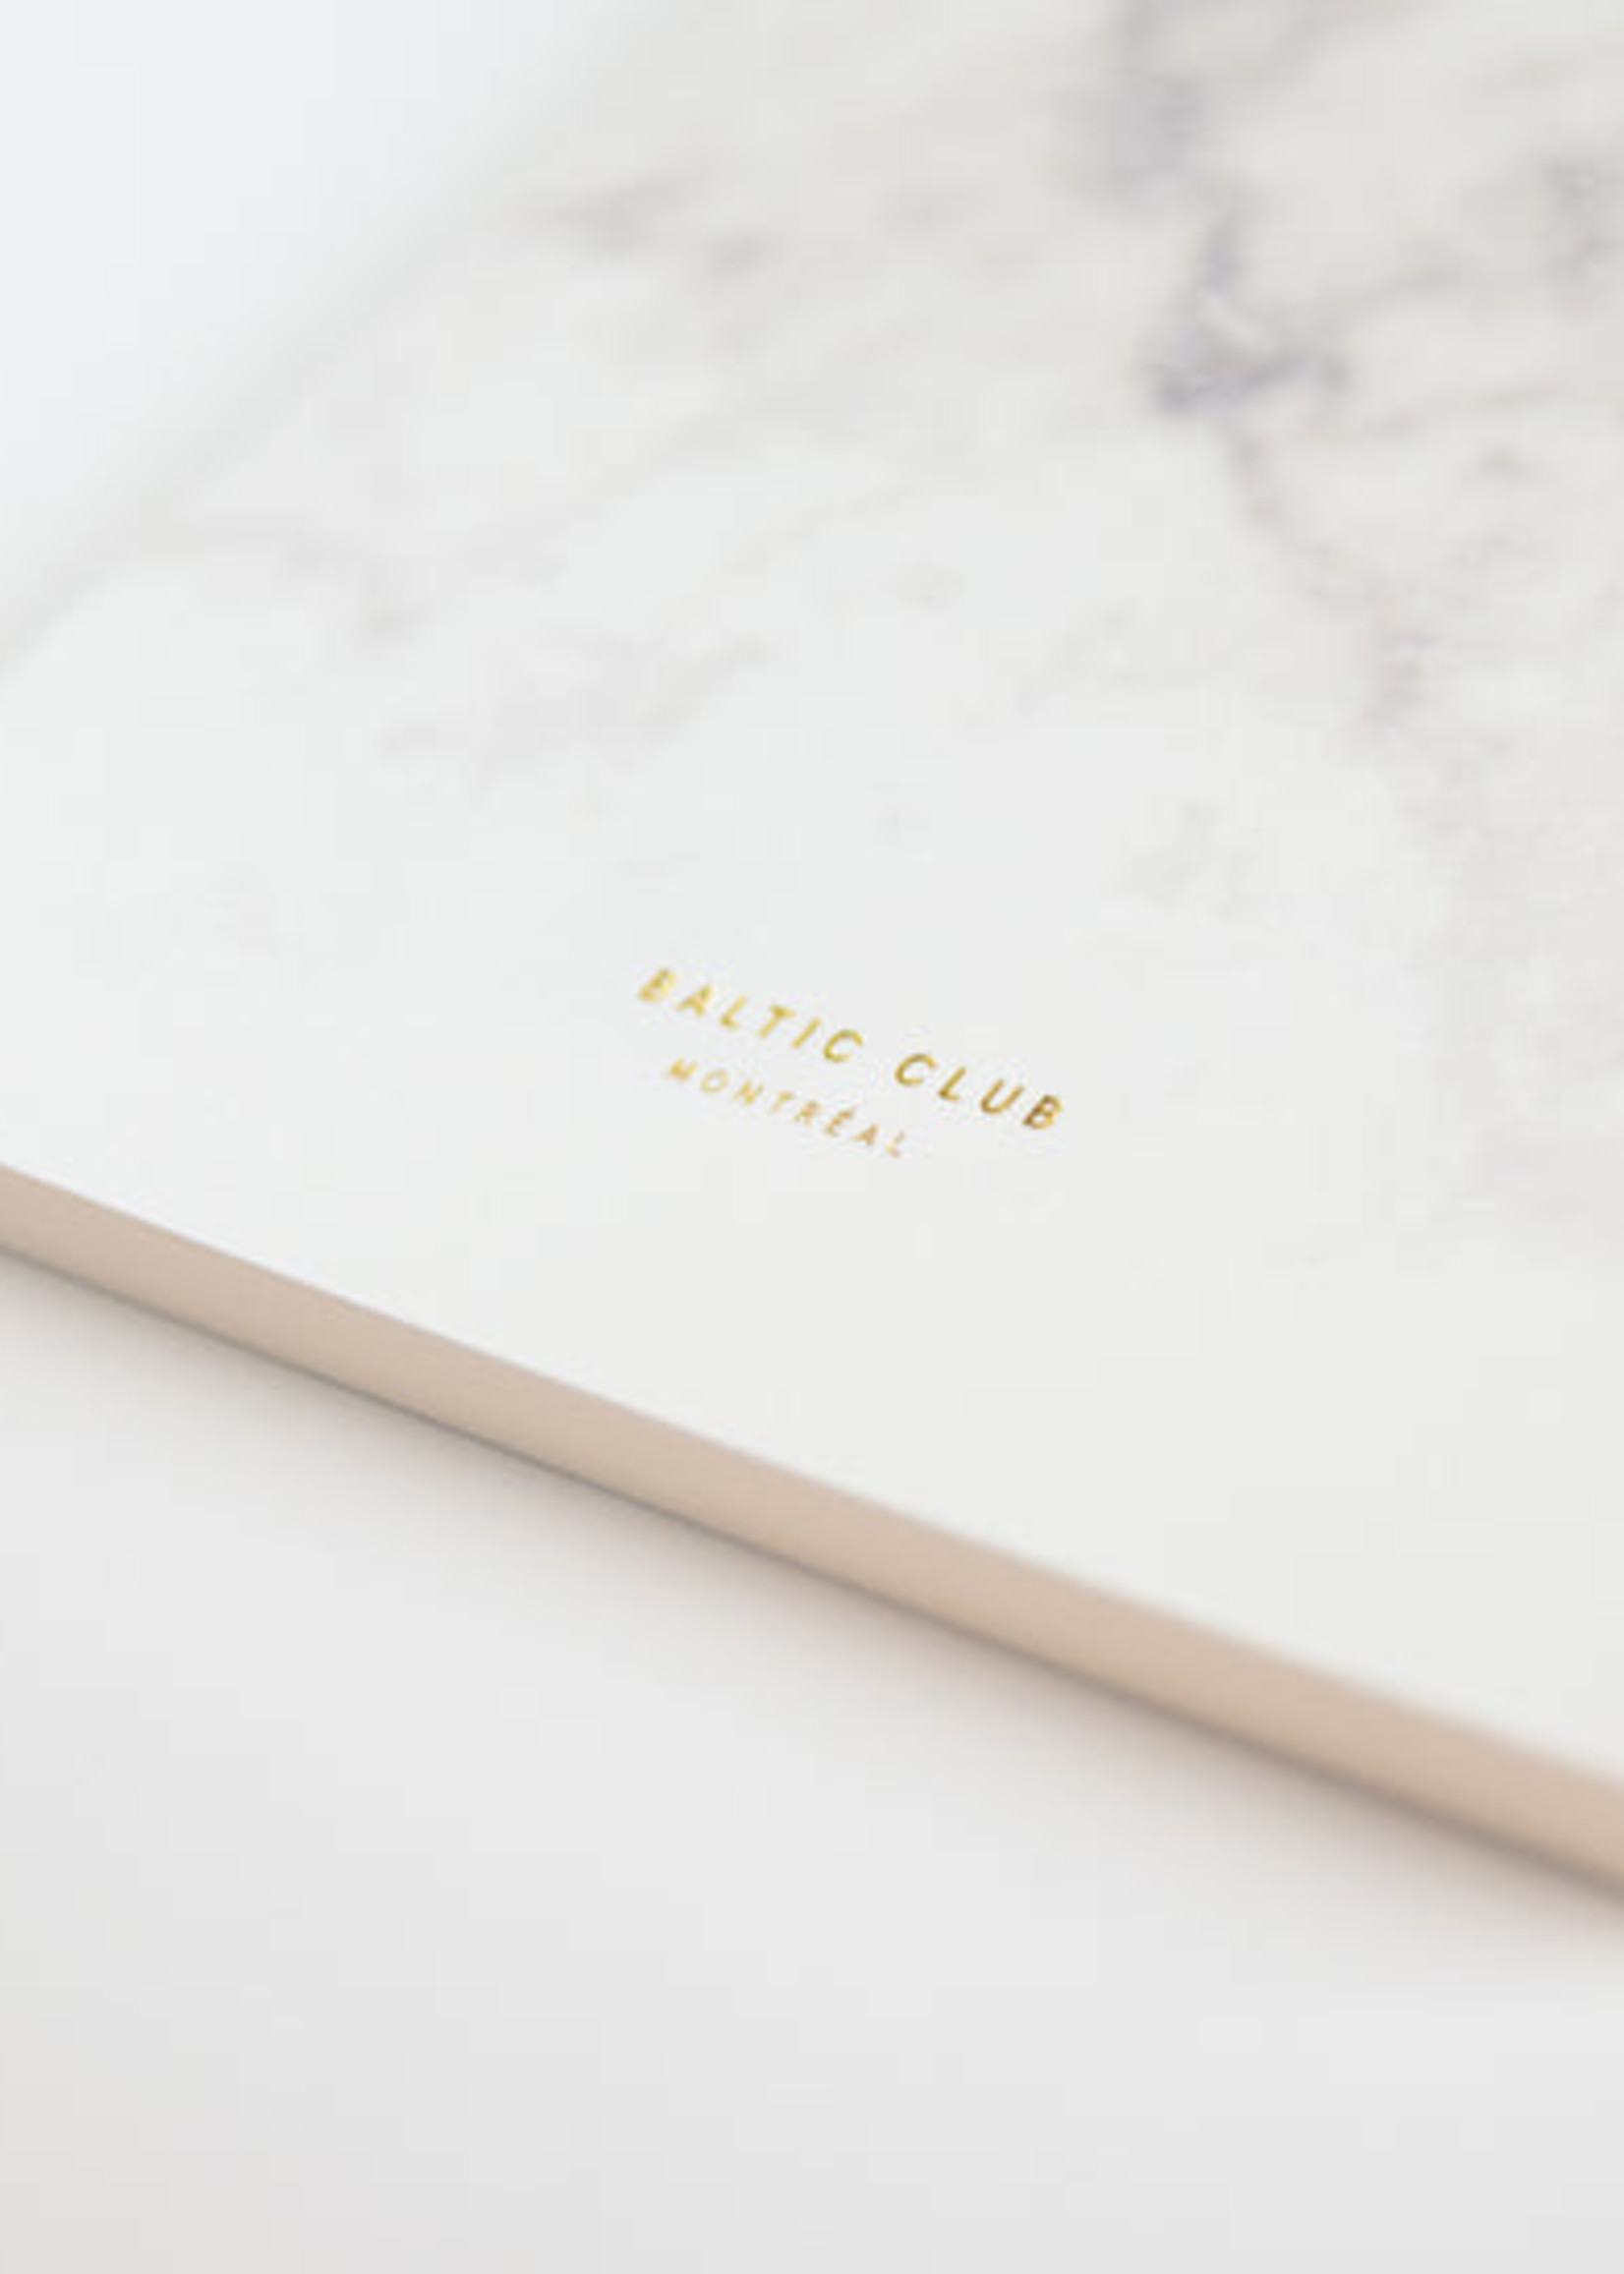 Baltic Club Baltic Club - White Marble Notebook